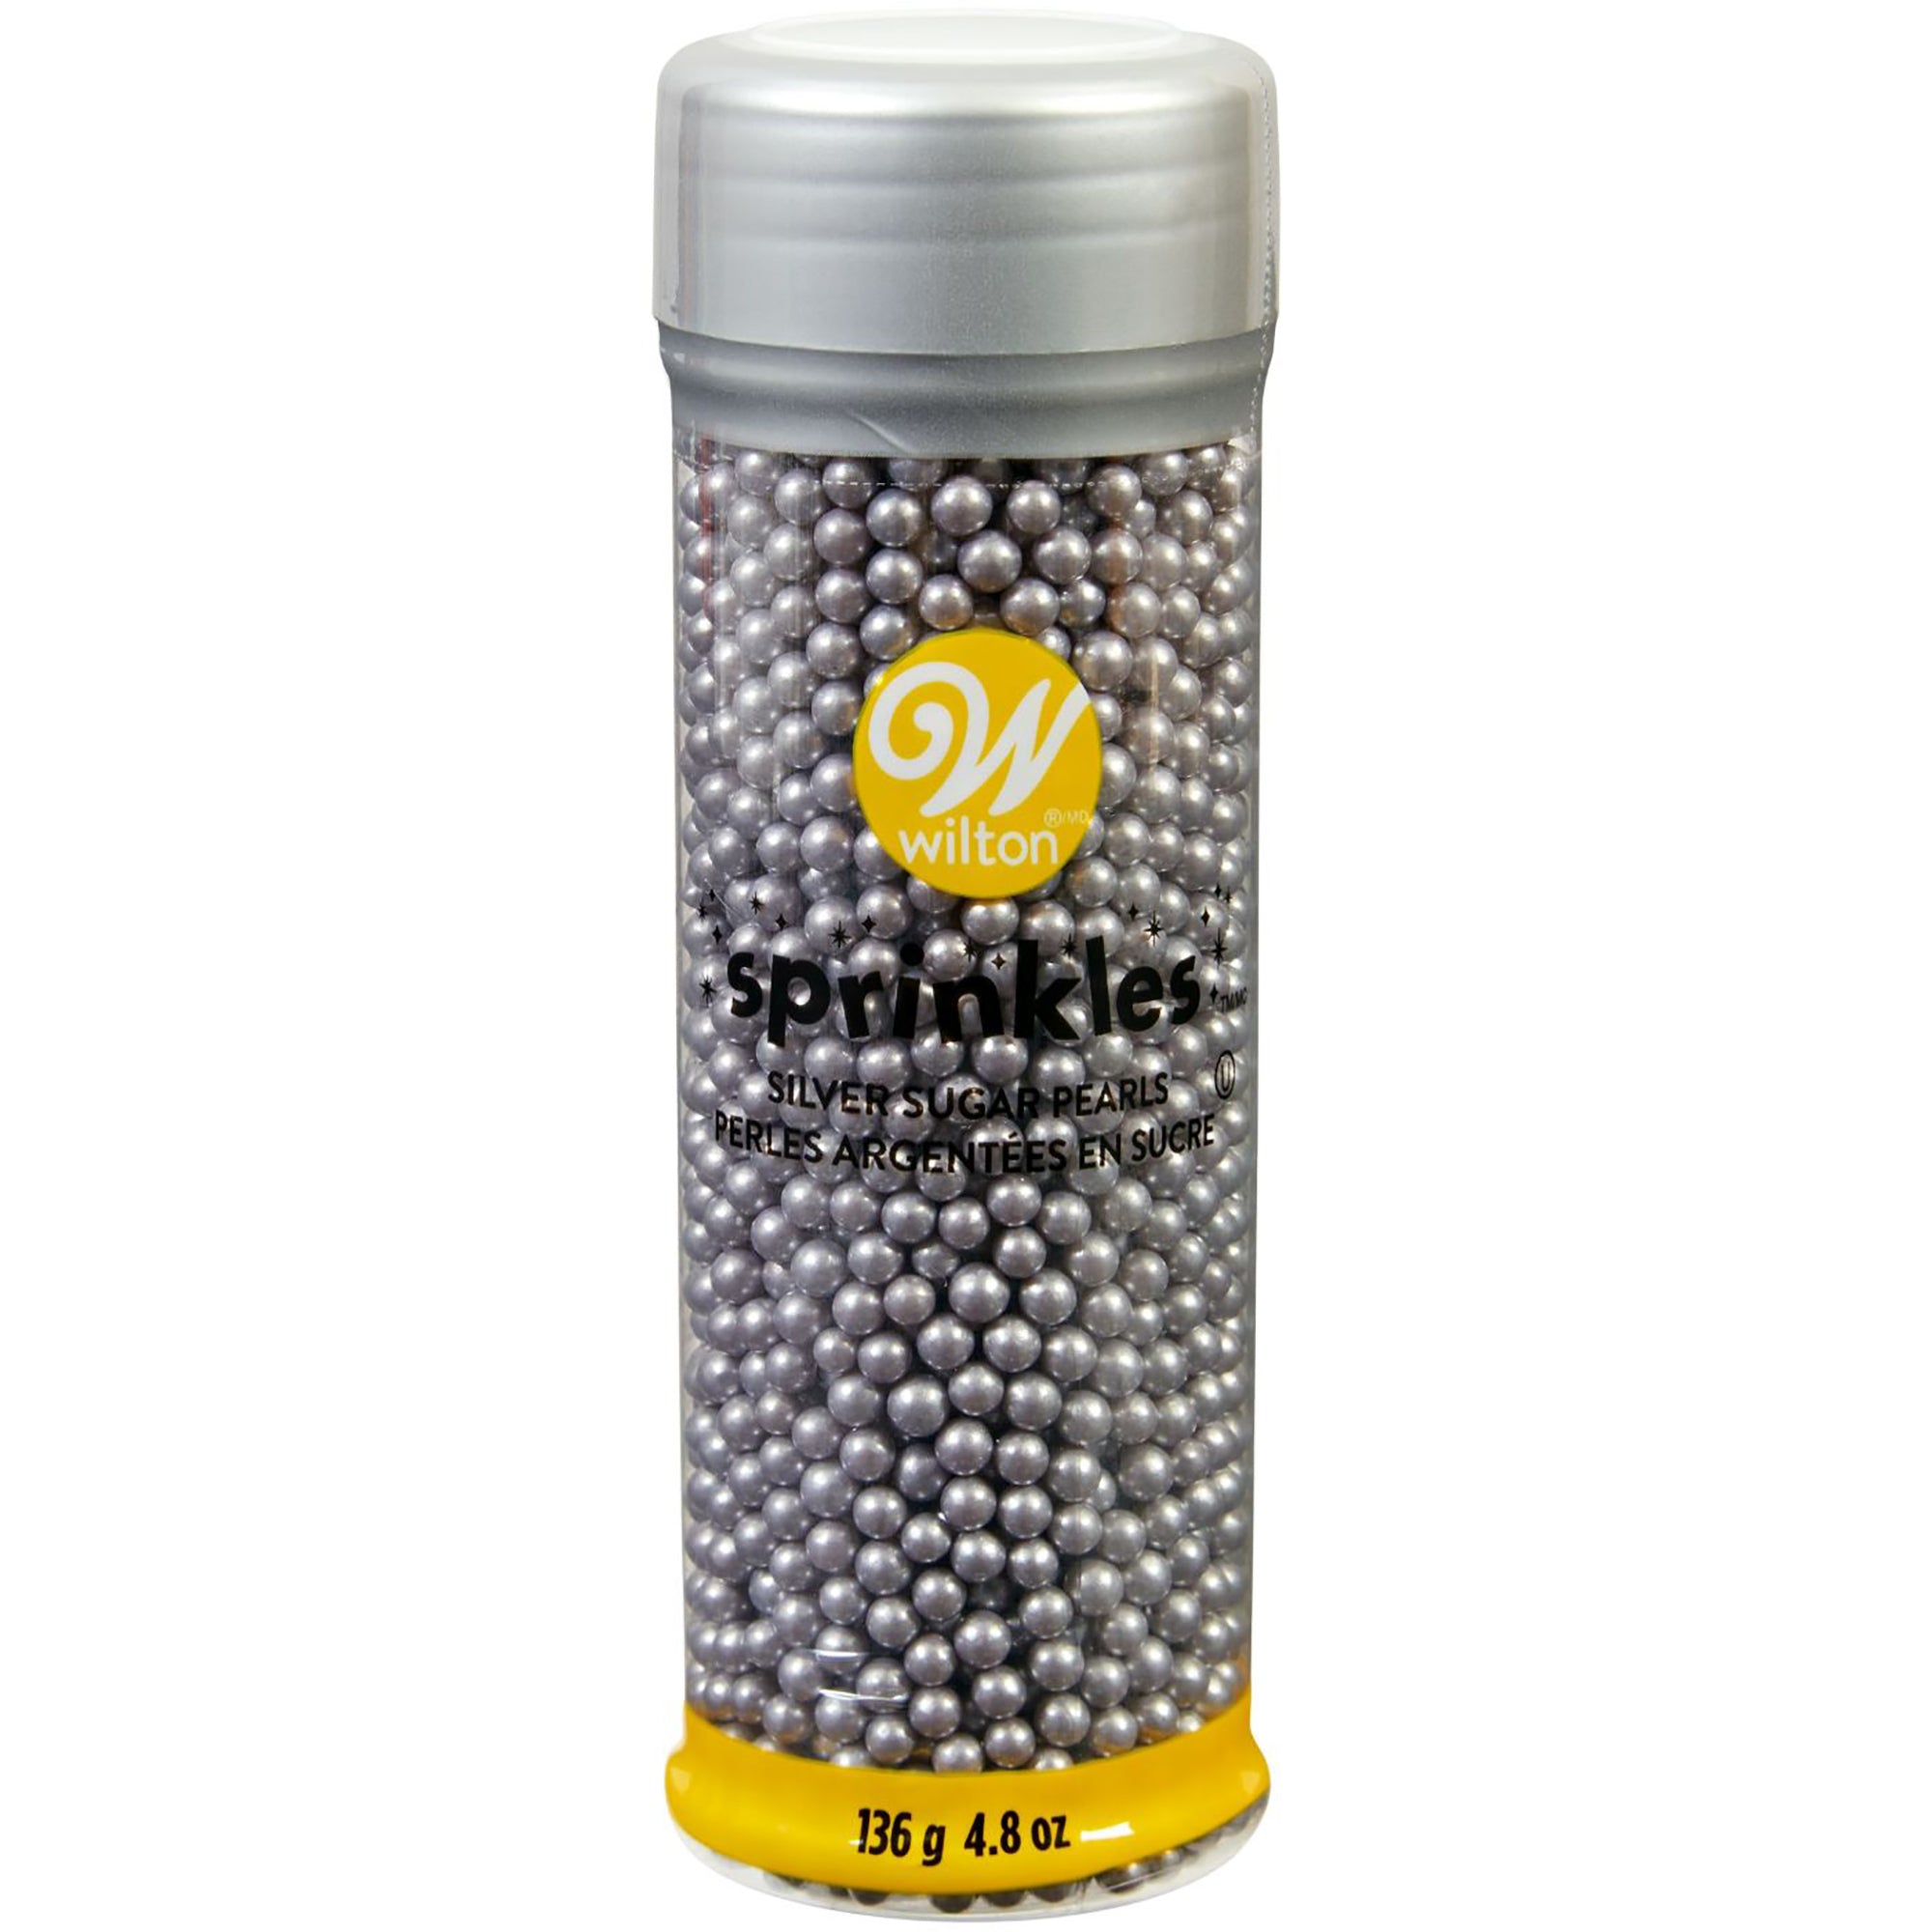 Wilton Sprinkles Silver Sugar Pearls 4.8oz (136g)